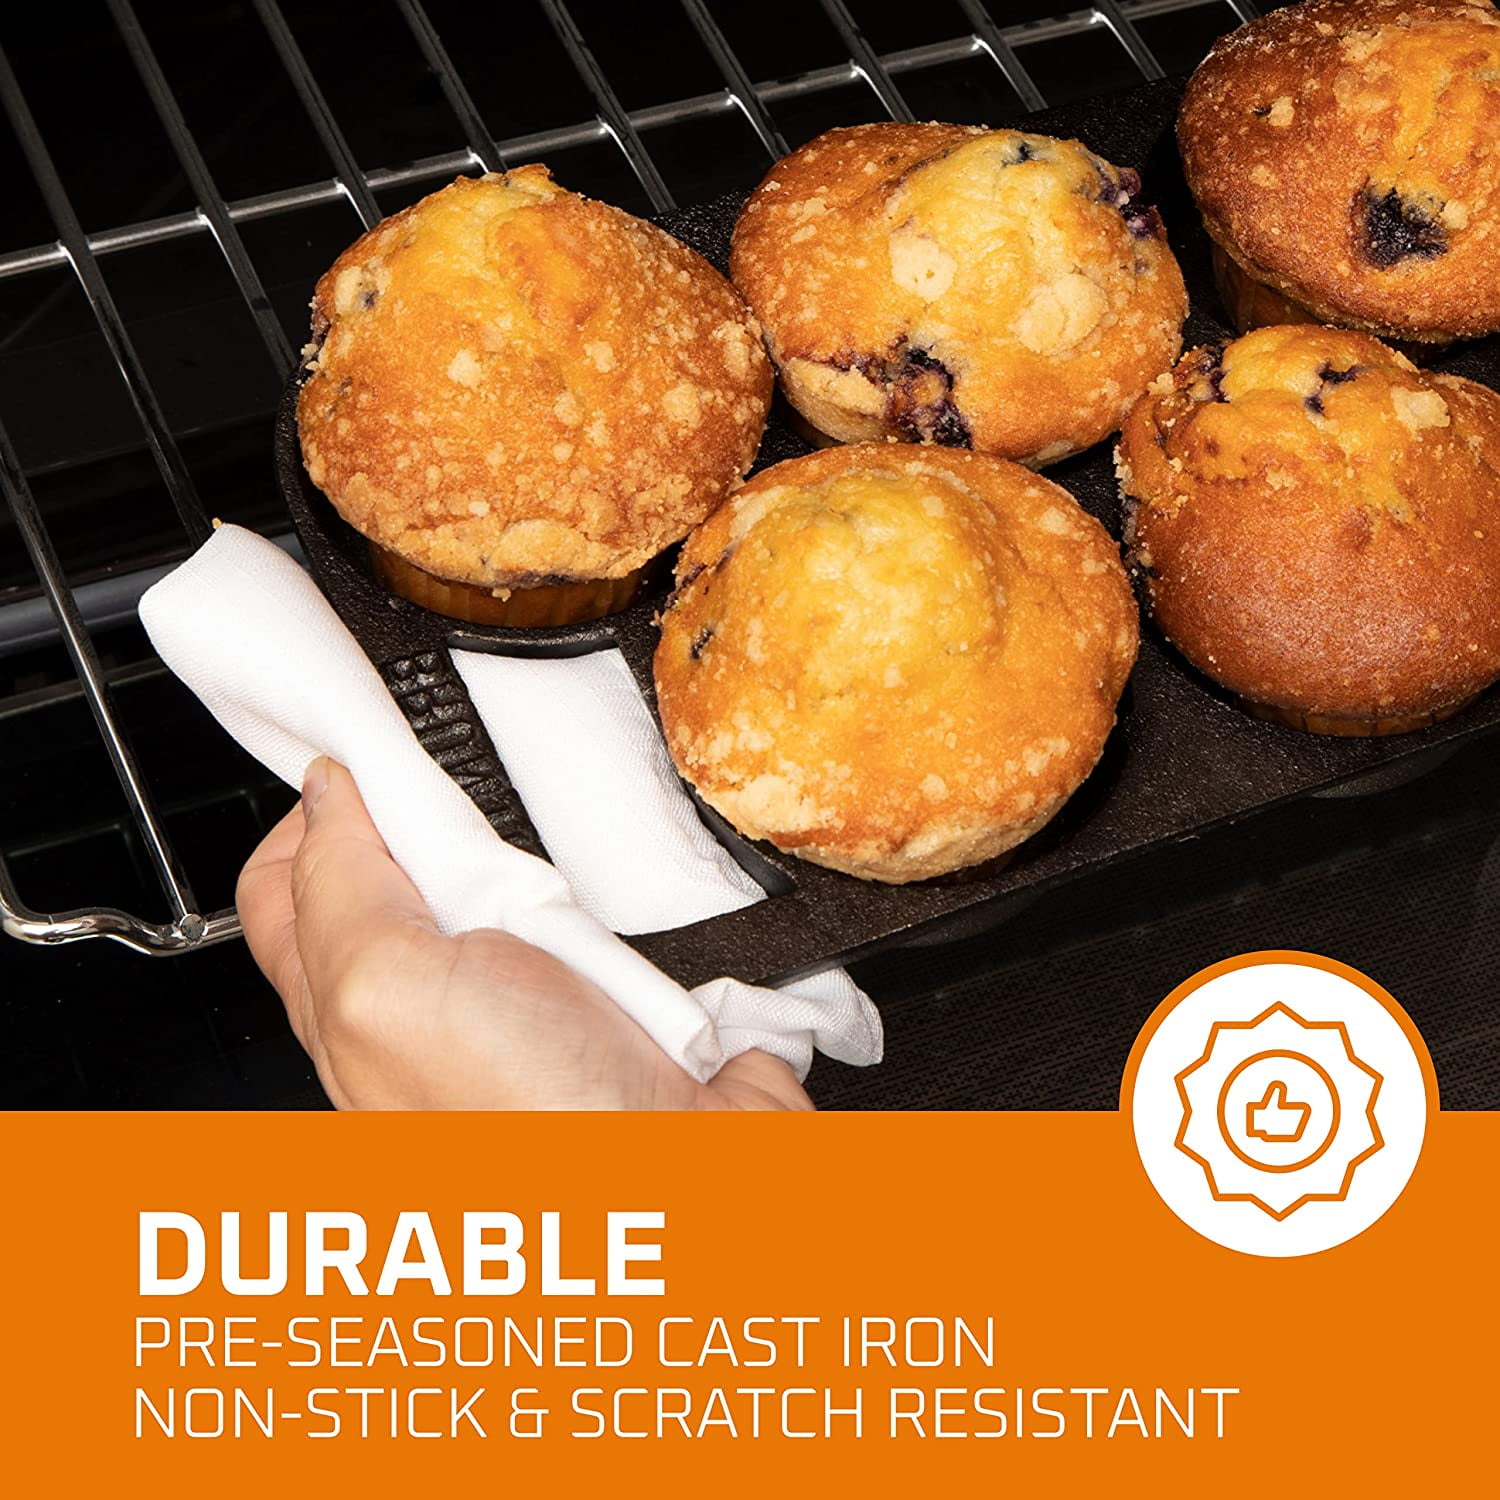 Bruntmor 11 Cup Muffin Pan - Premium Cast Iron Non-Stick Baking